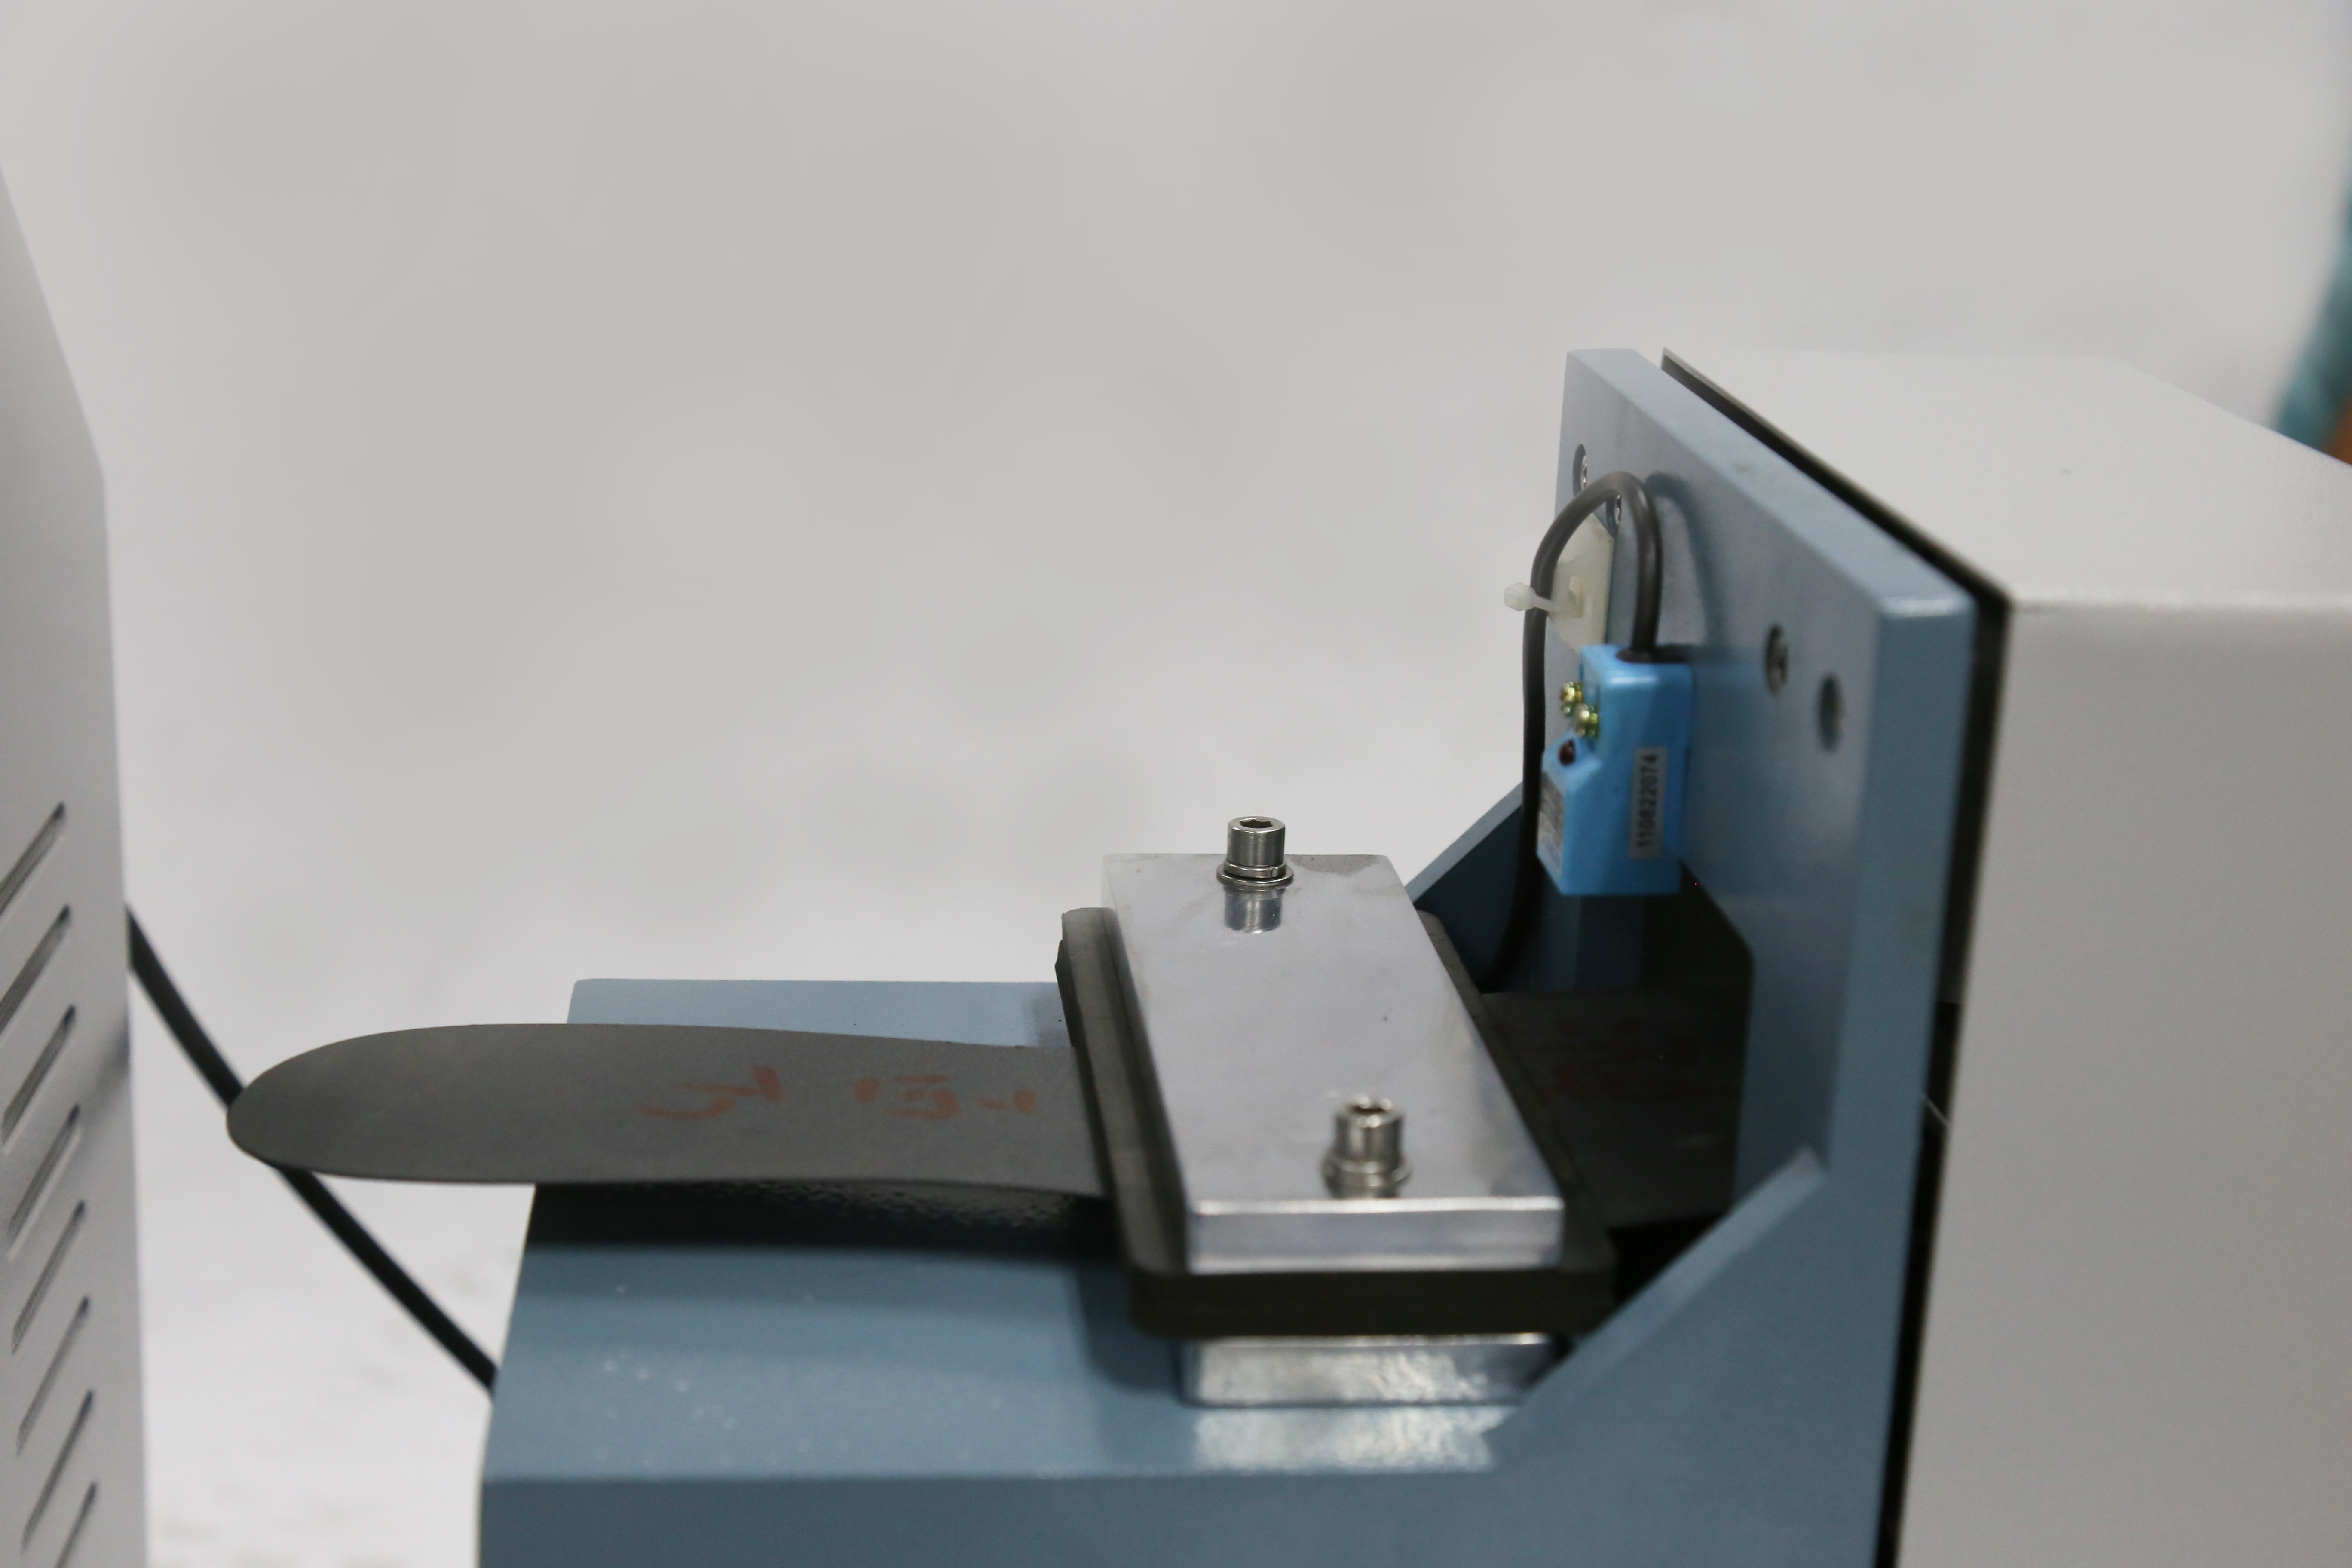 Máquina de ensayo de flexión de placas ARMOR de alta calidad